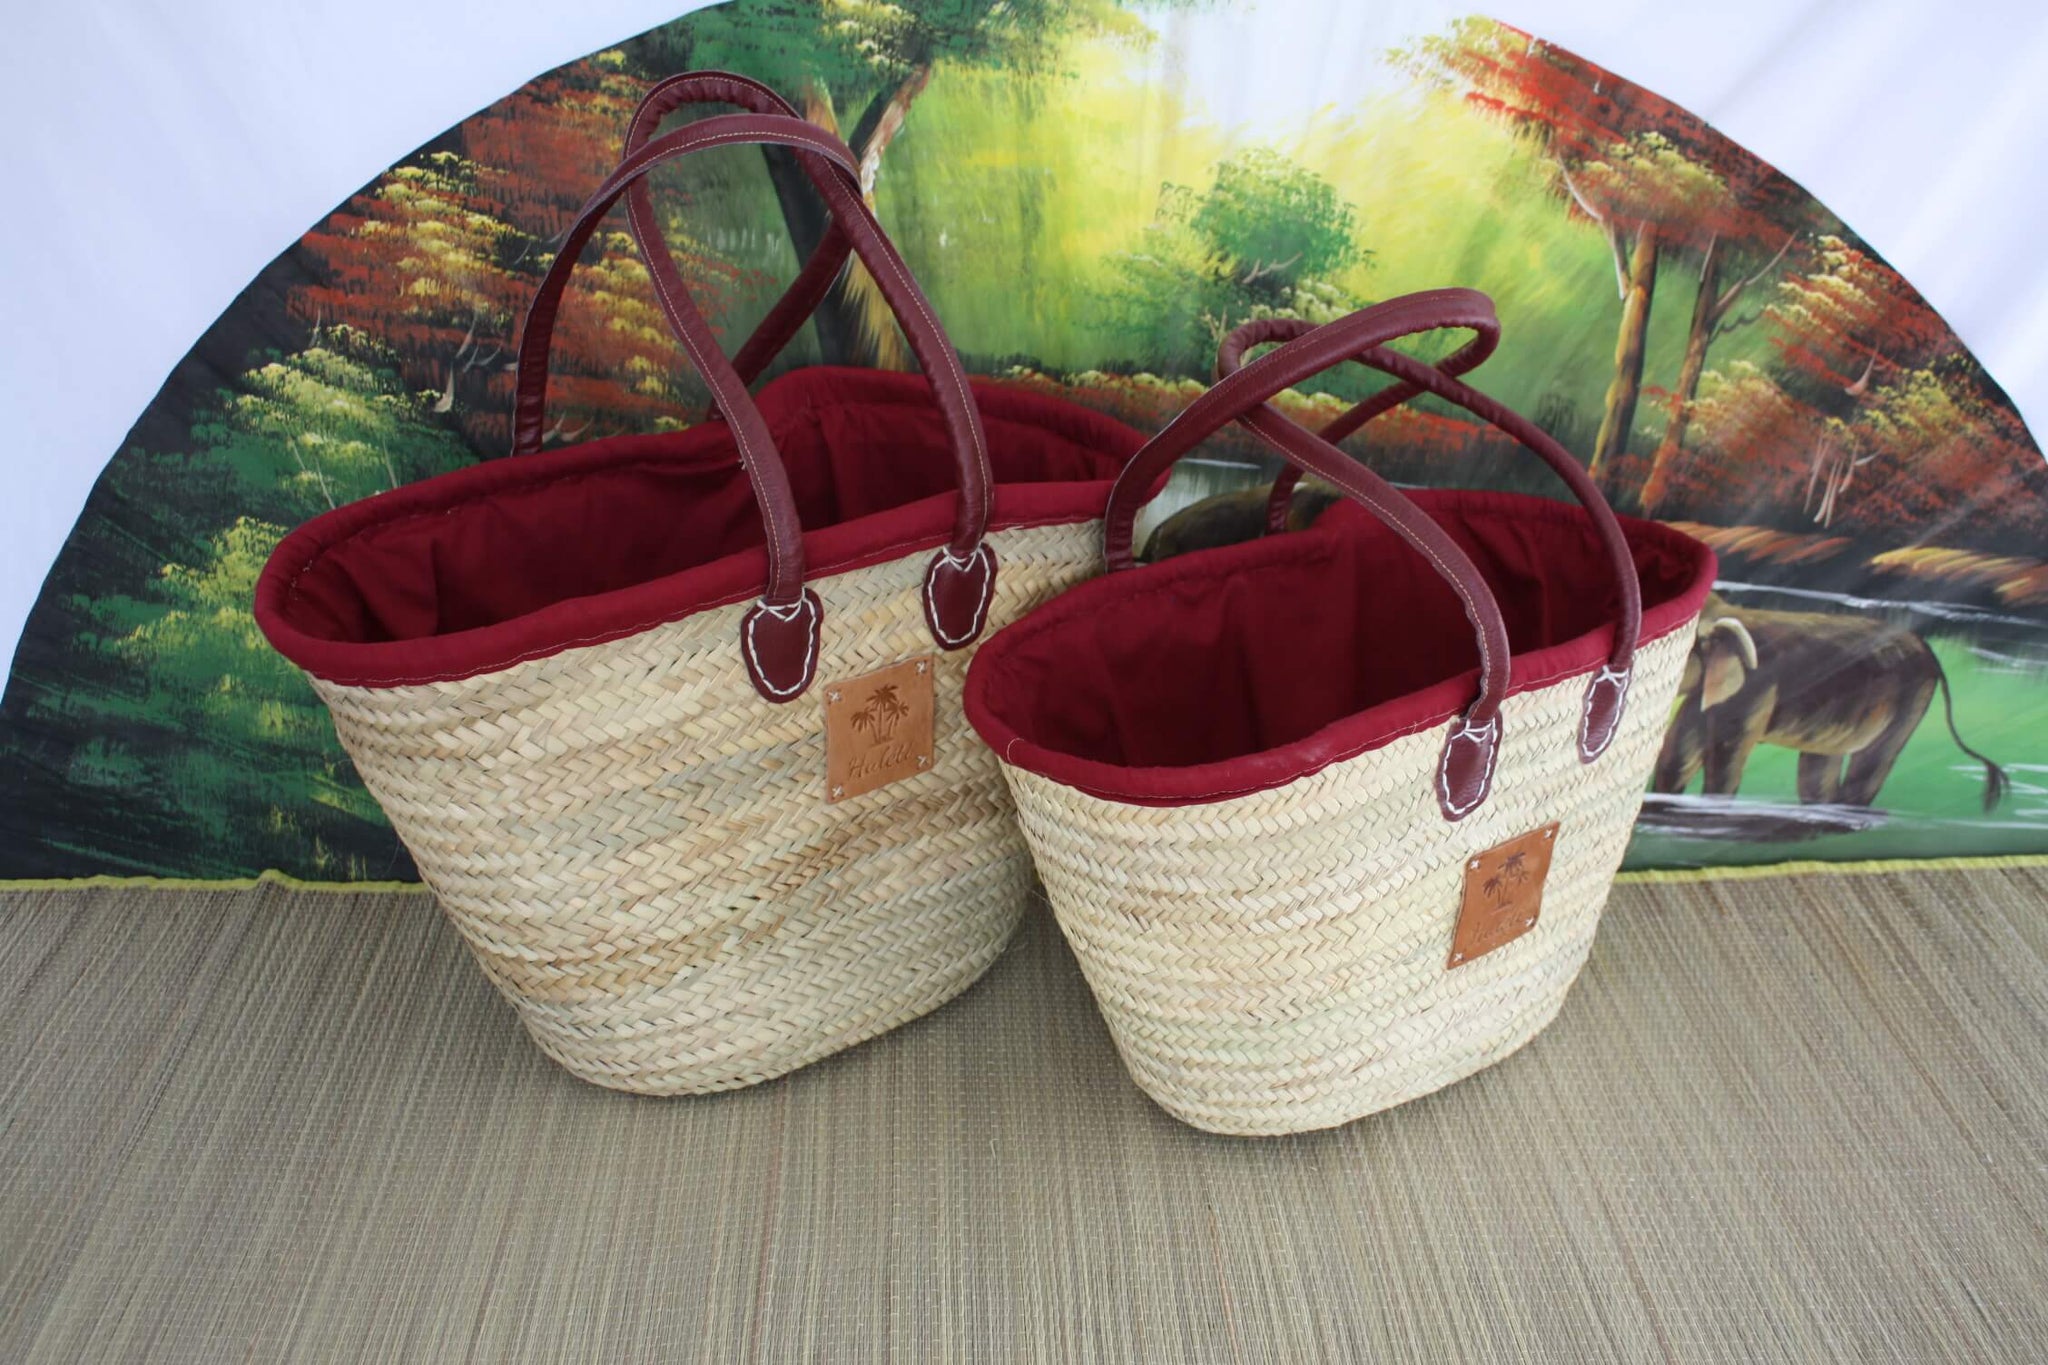 Set of 2 Shopping baskets with African fabric pouch - MEDIUM + LARGE XXL - Straw basket bag Market shopping basket Palm beach basket